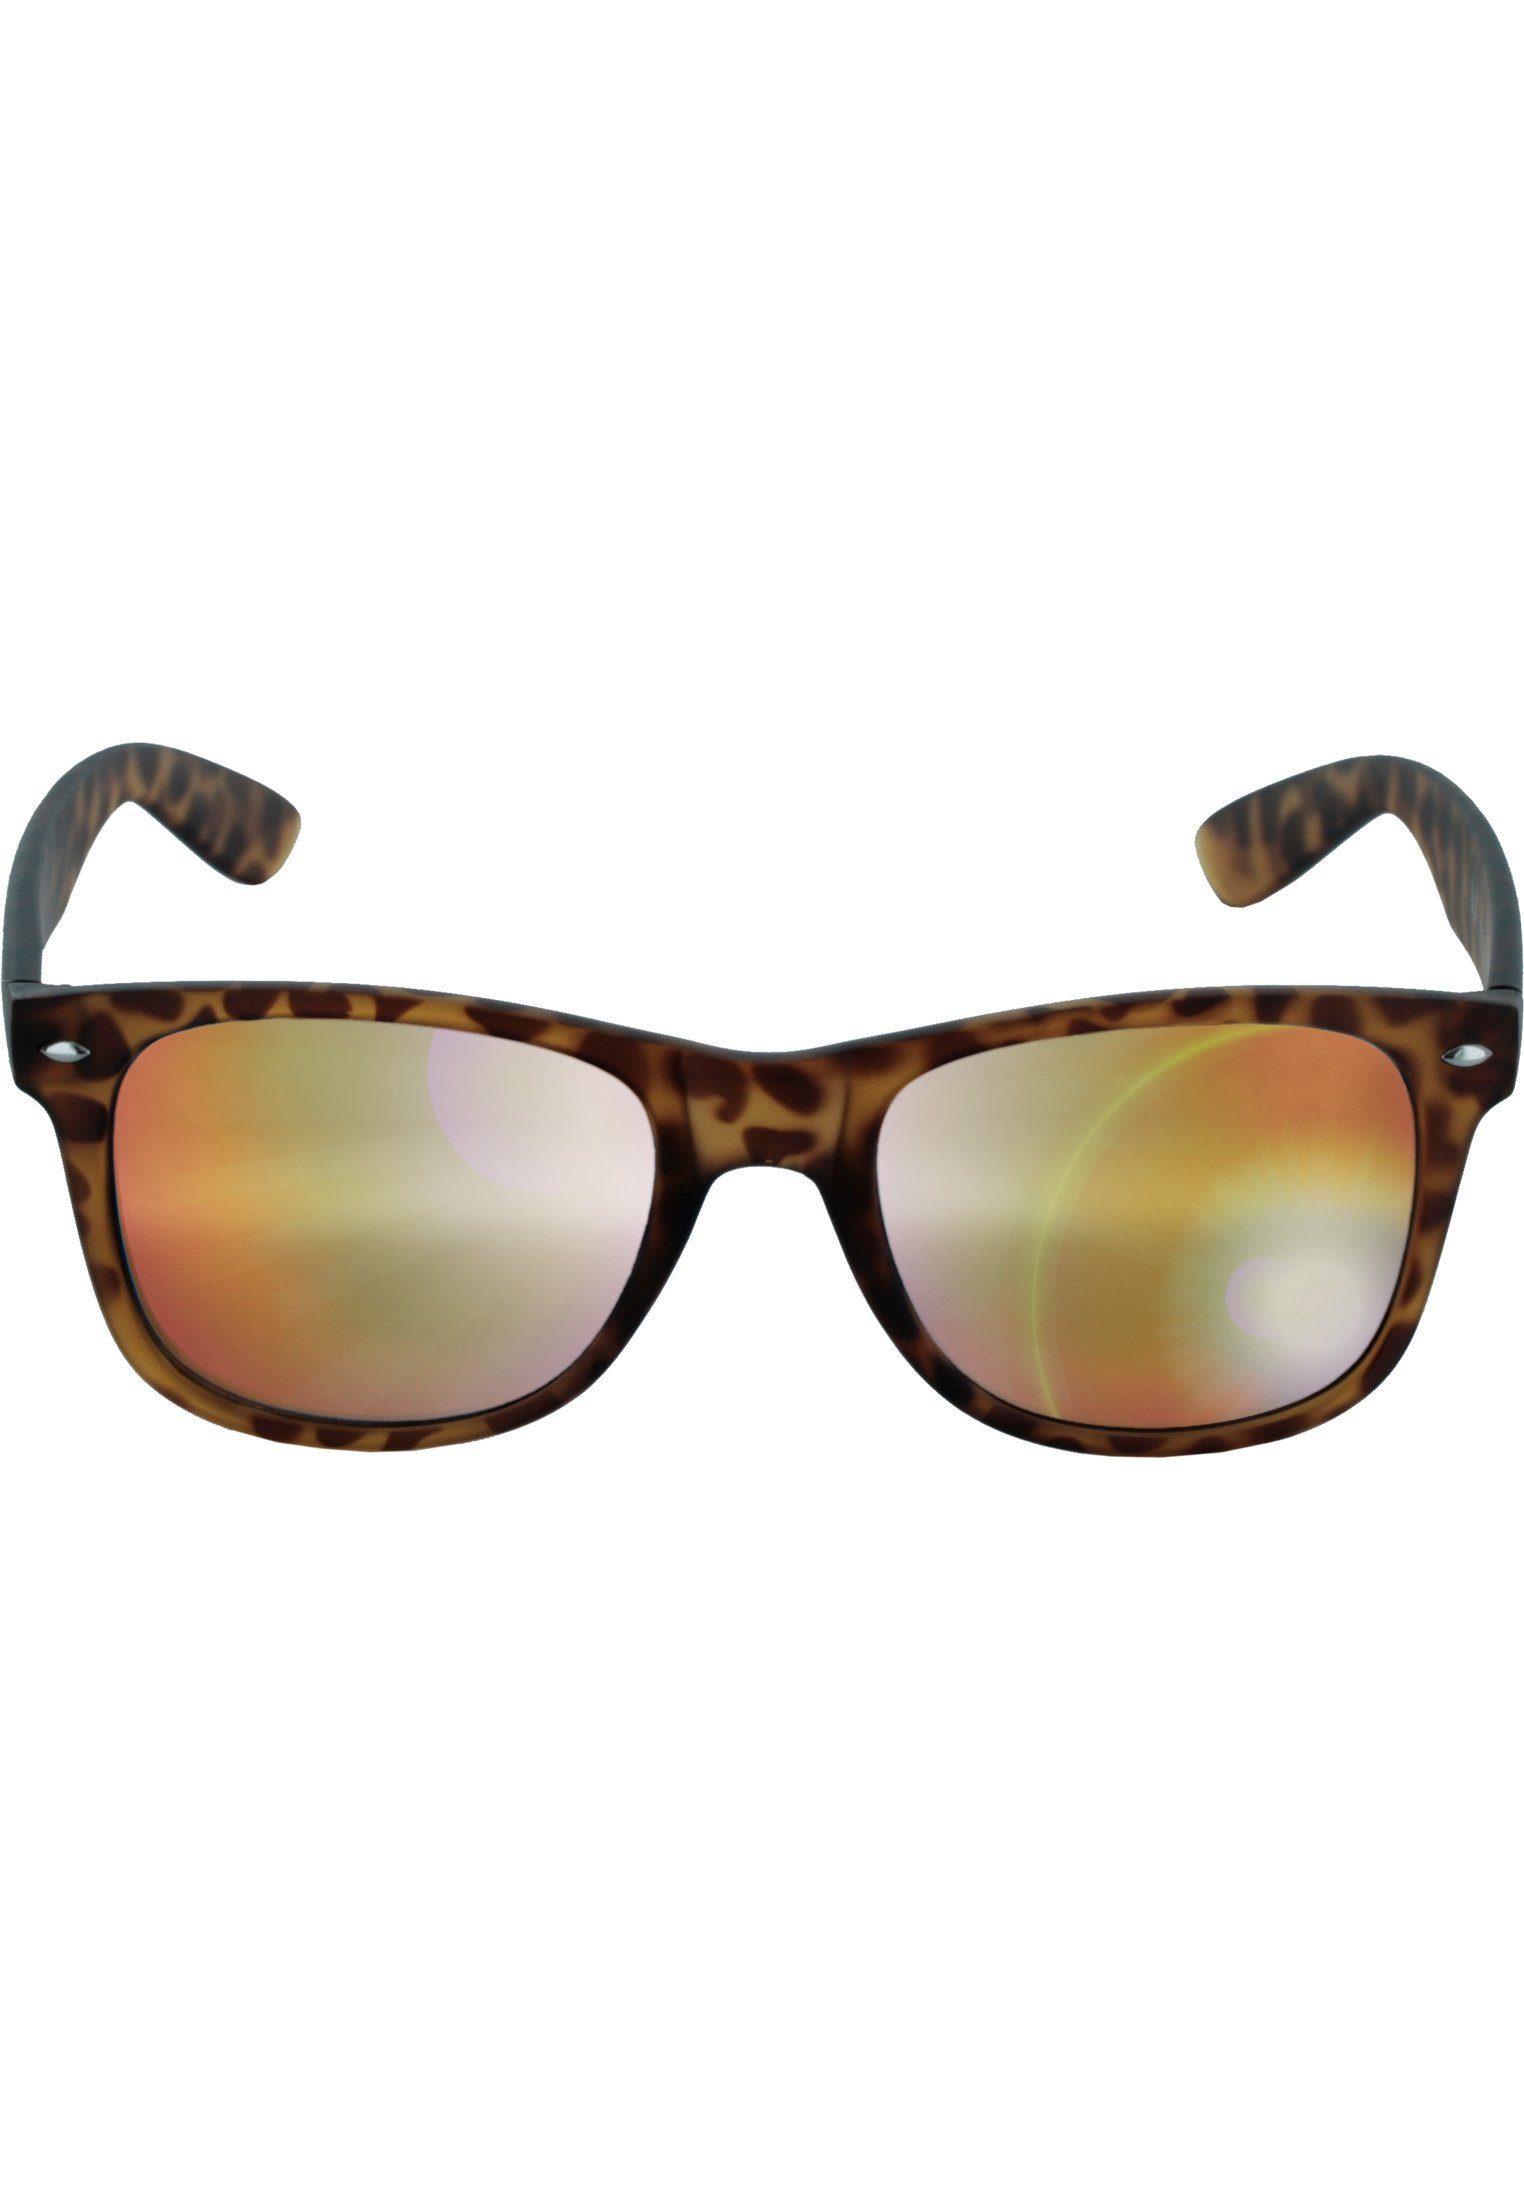 MSTRDS Sonnenbrille Accessoires Sunglasses amber/orange Likoma Mirror